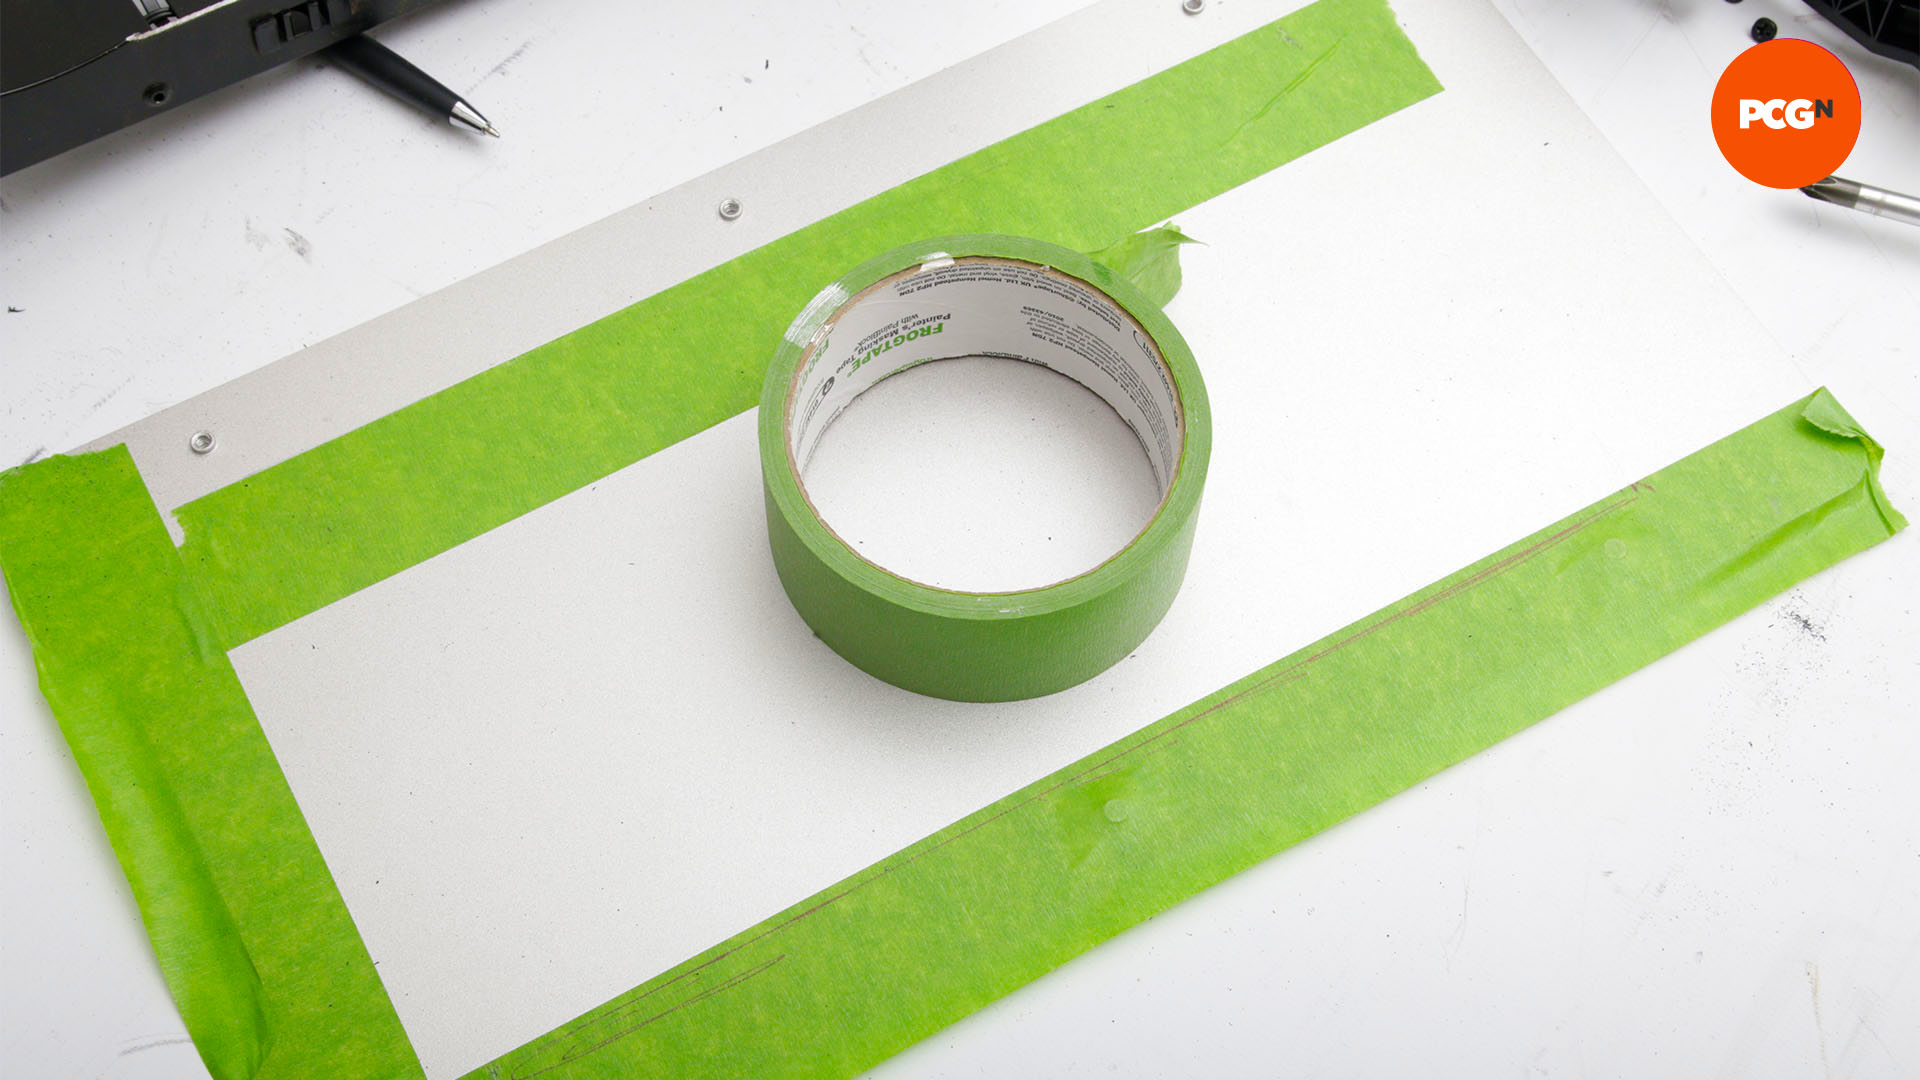 How to make a radiator mount: Use masking tape